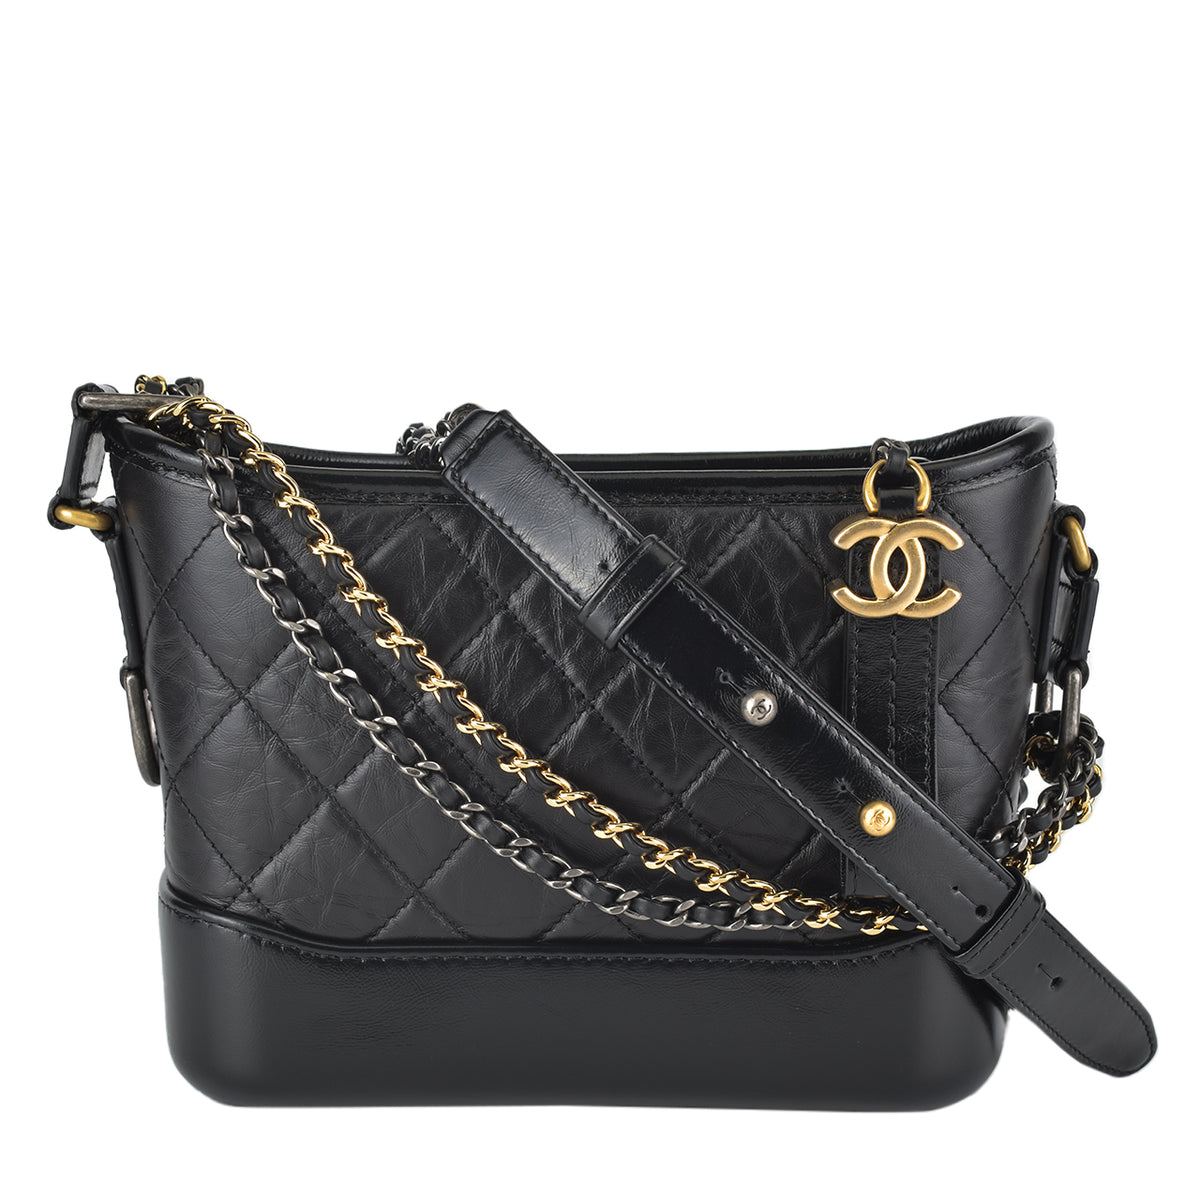 Chanel 19 Handbag In Tweed Black, Blue, Pink & Ecru with Gold-Tone